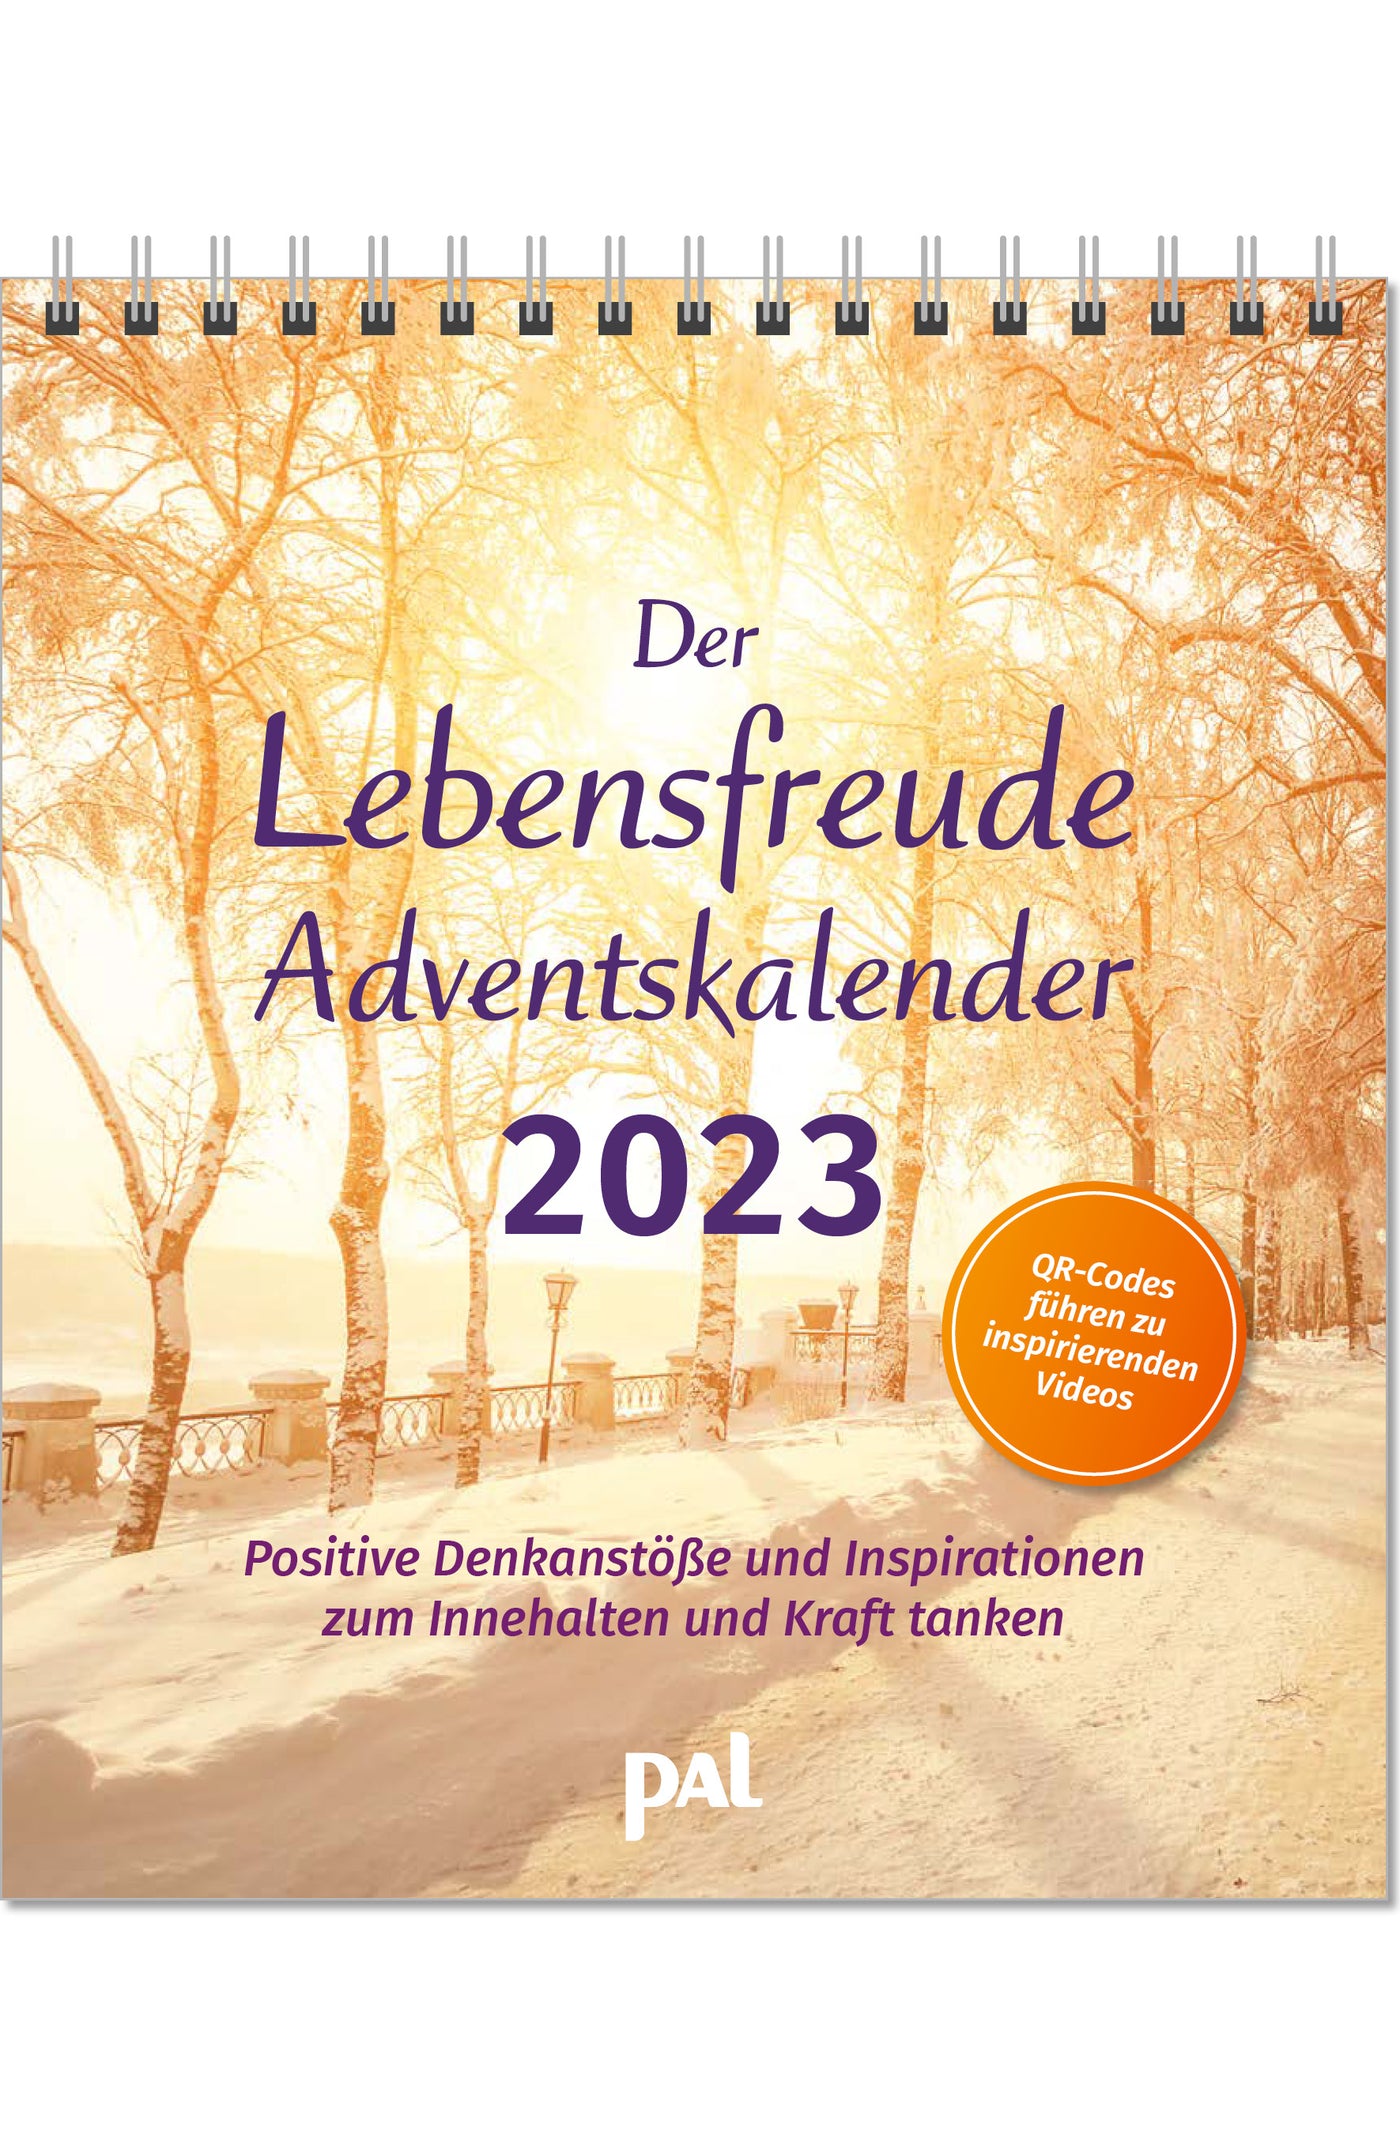 PAL Verlag Lebensfreude Adventskalender 2023 Denkanstöße Geschenk Inspiration